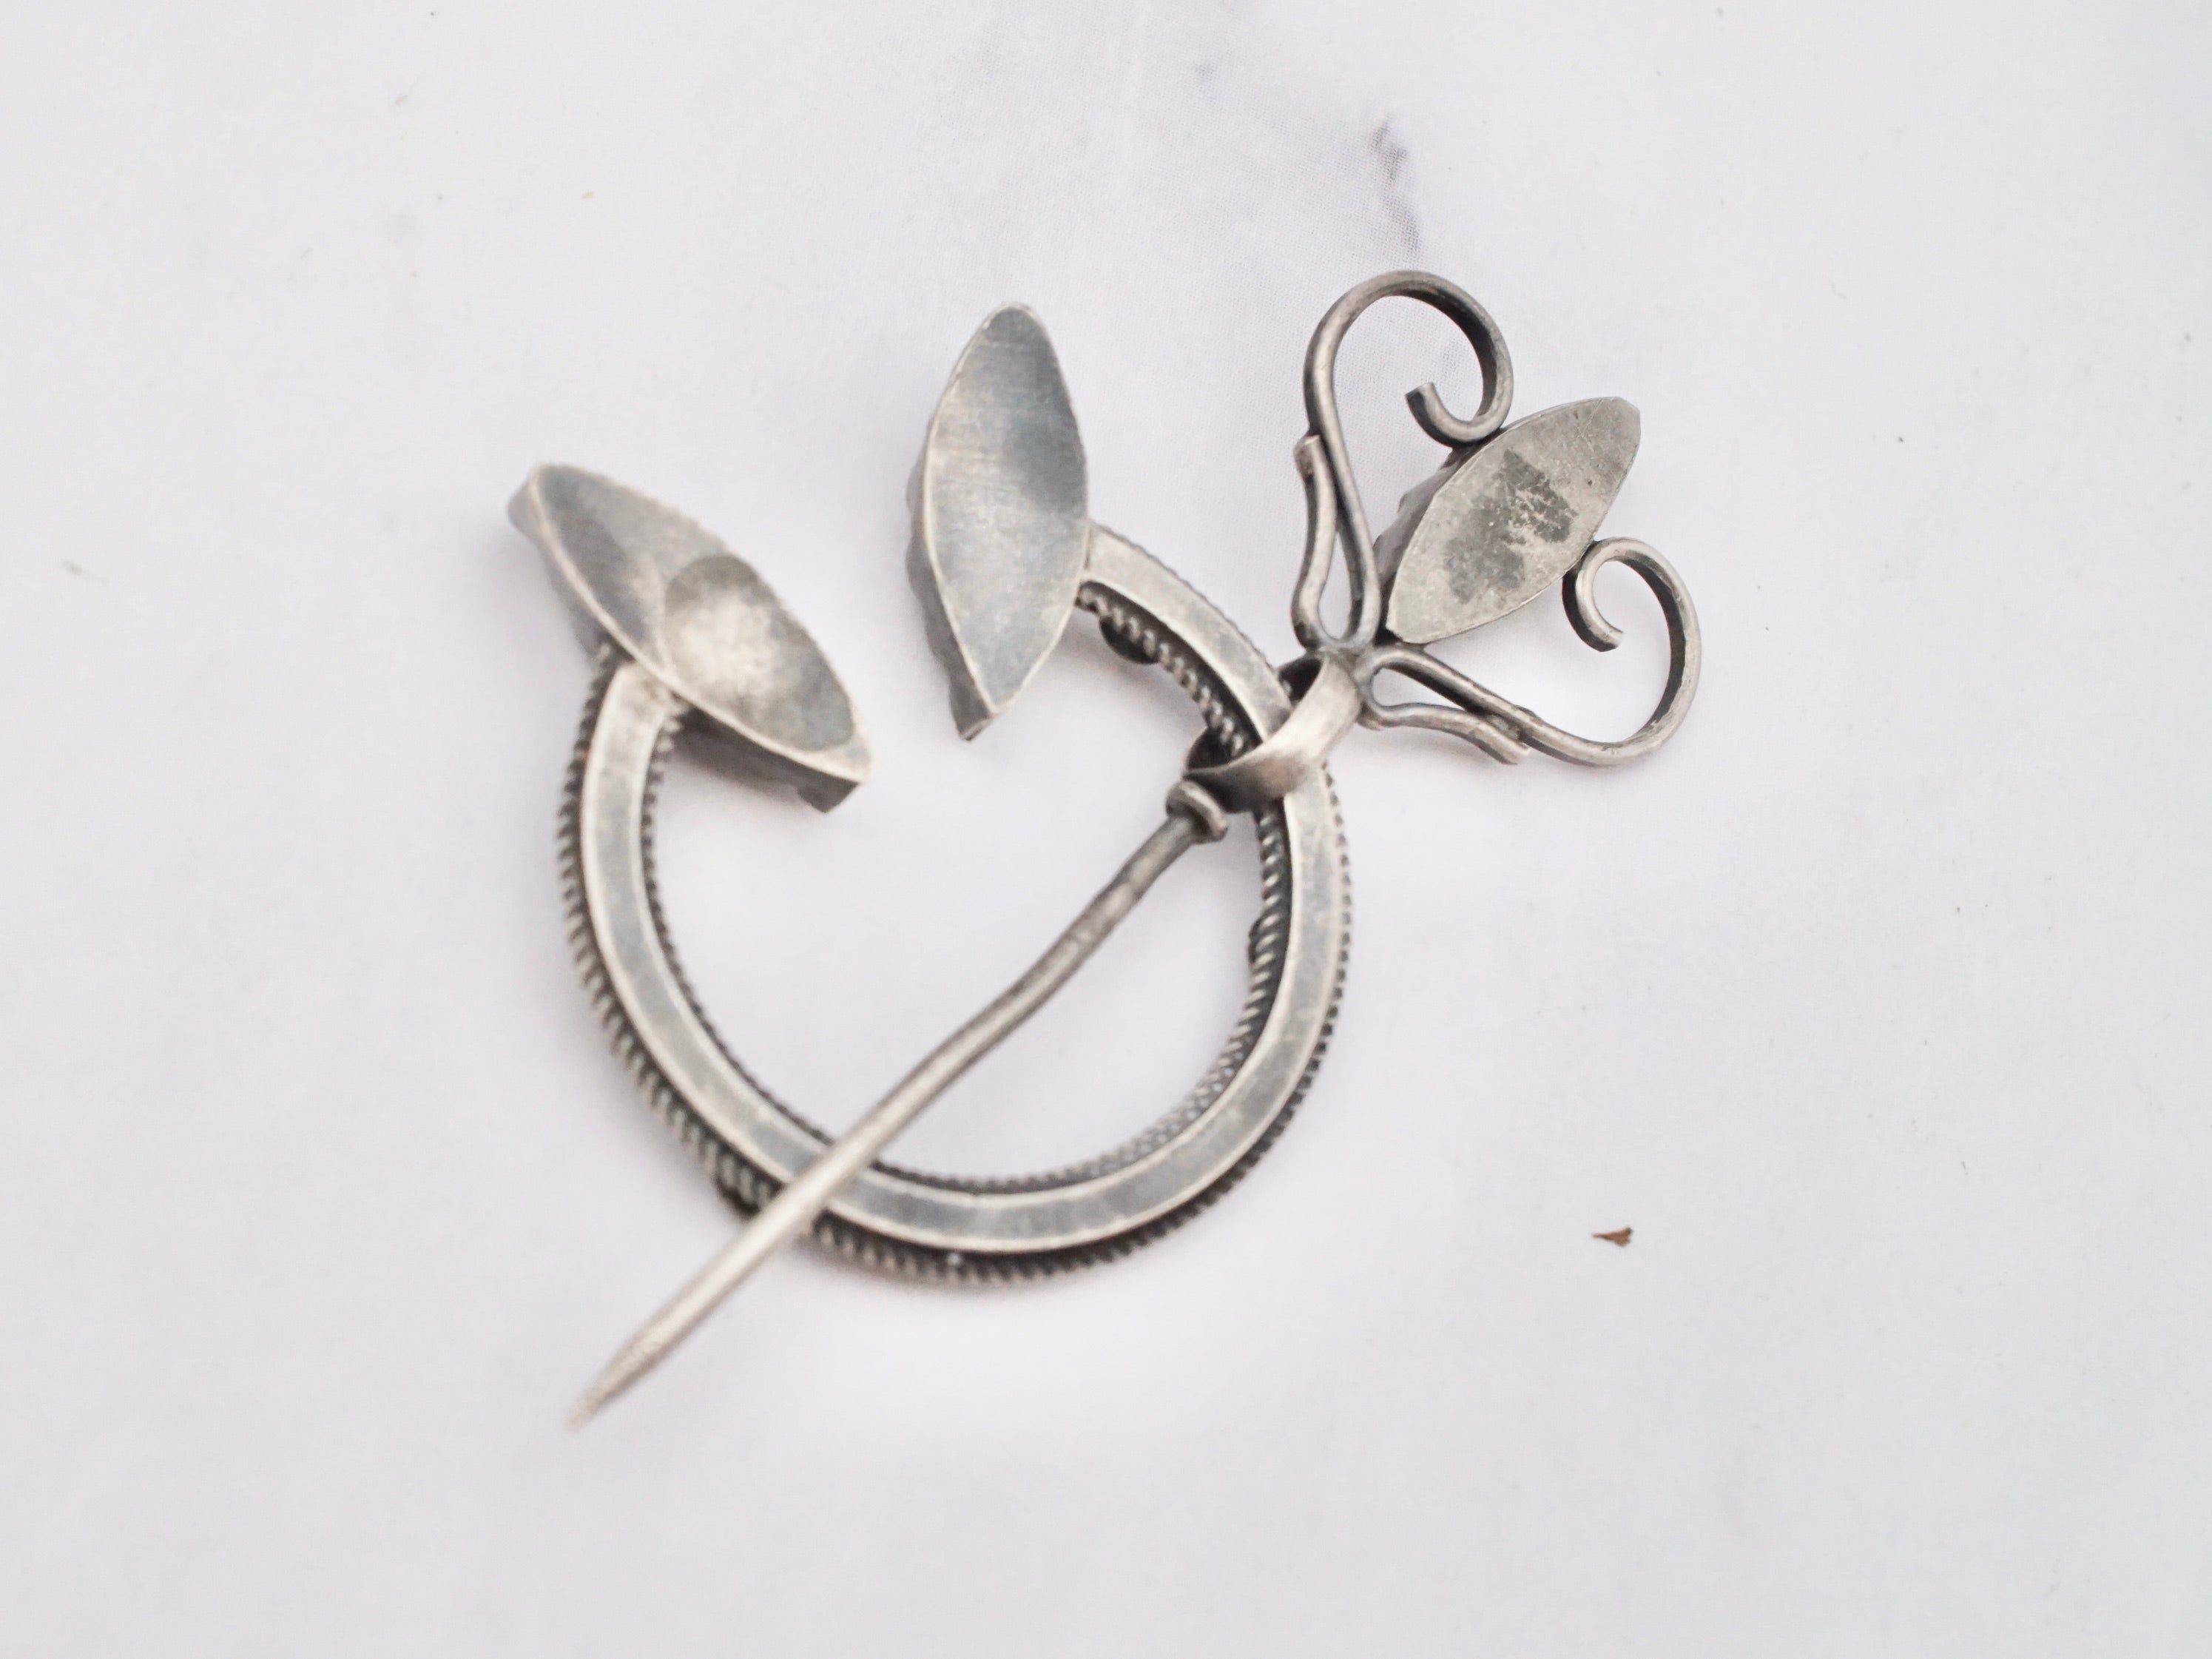 Antique Celtic silver, glass gem, and enamel penannular brooch/cloak pin